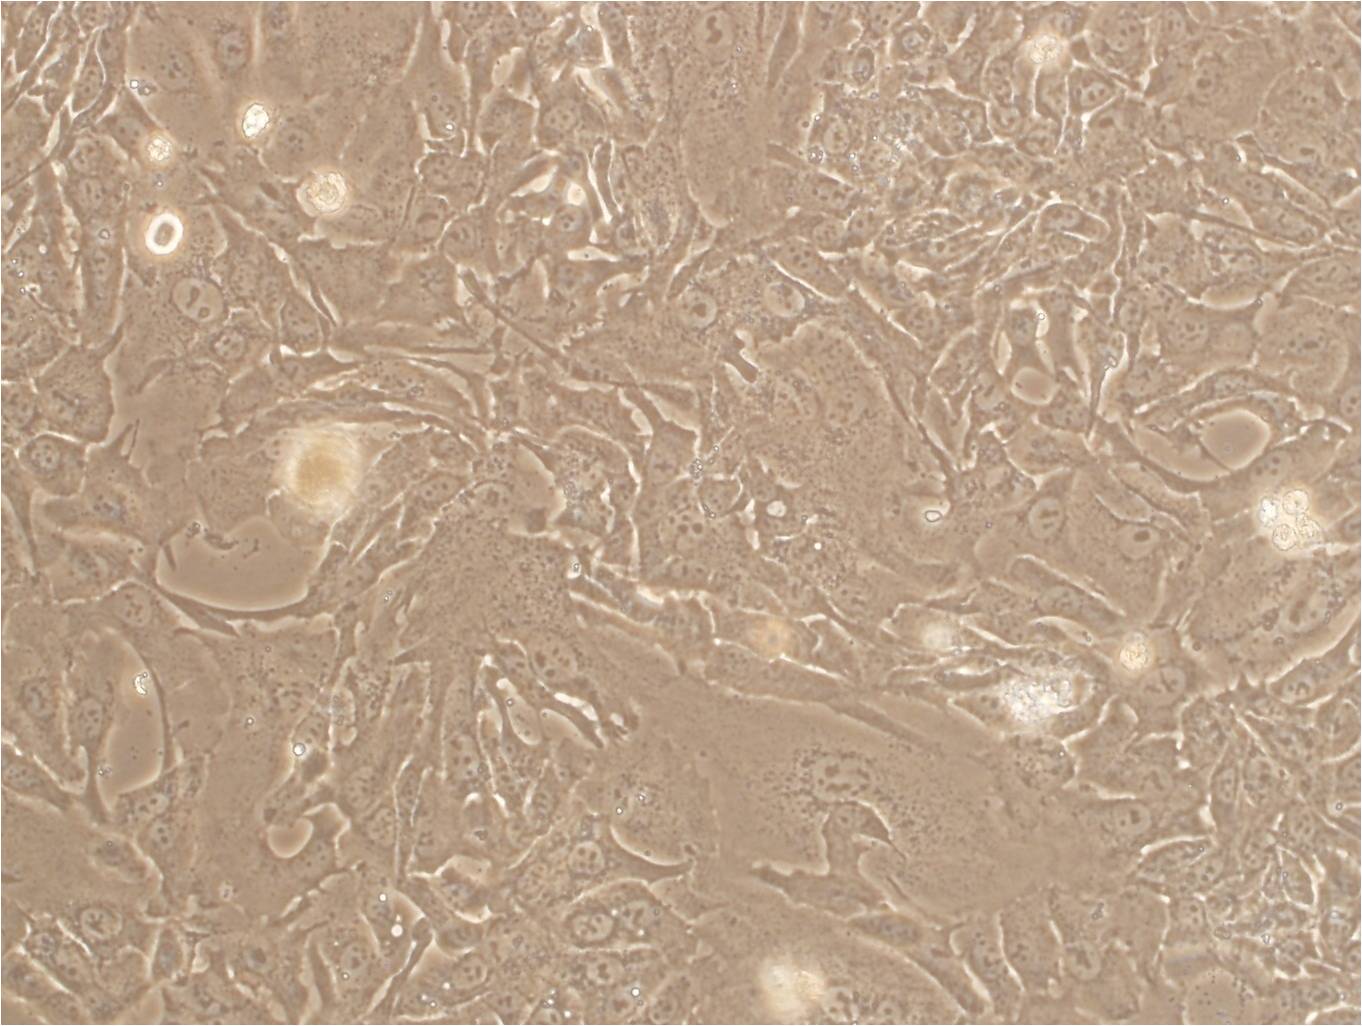 MC/9 Fresh Cells|小鼠肥大细胞(送STR基因图谱),MC/9 Fresh Cells